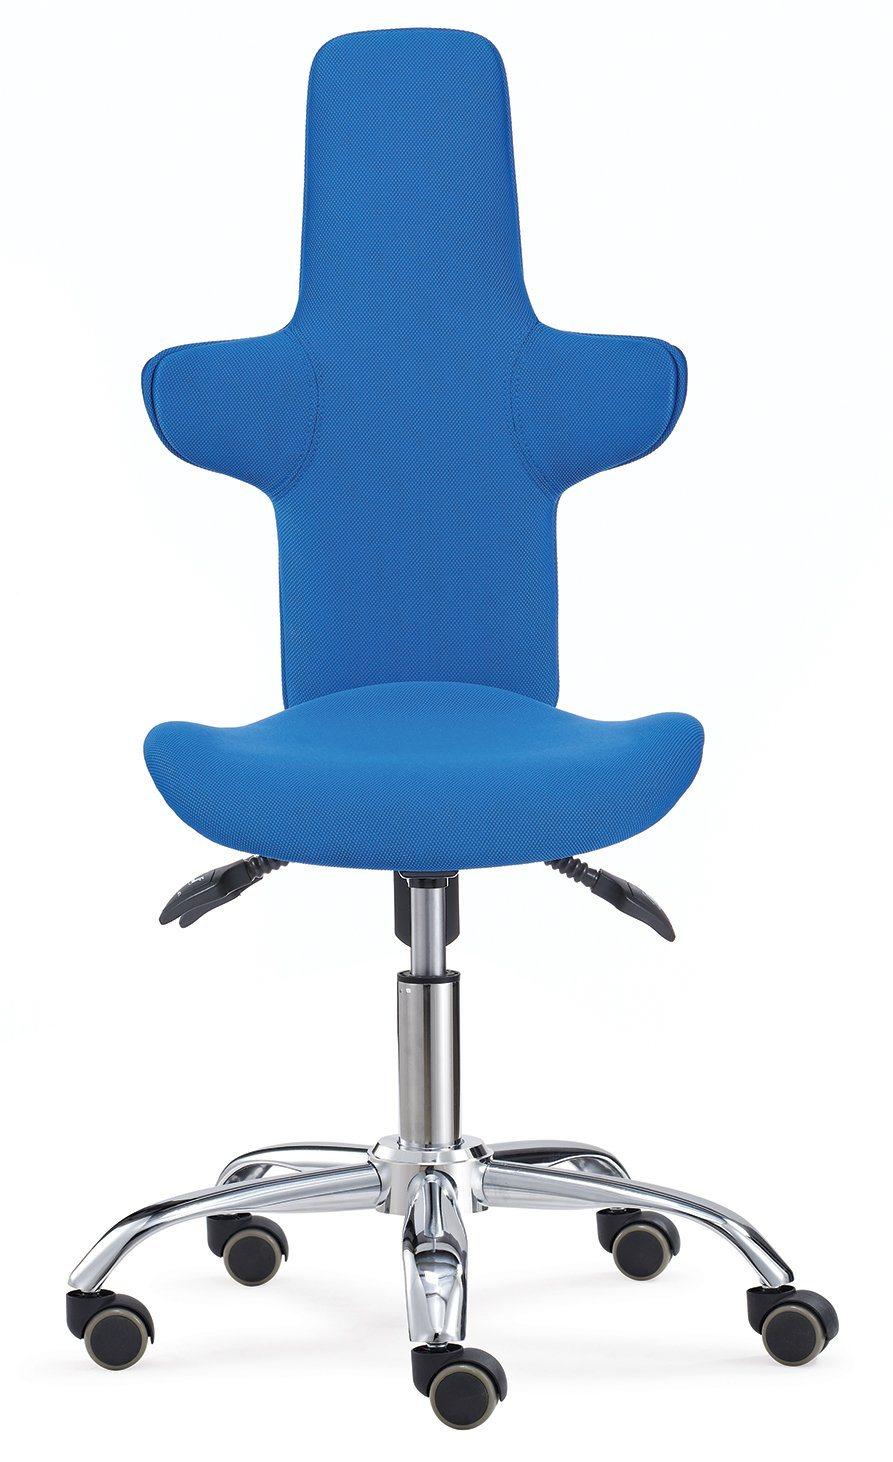 Ergonomic Mesh Office Chair for Adult